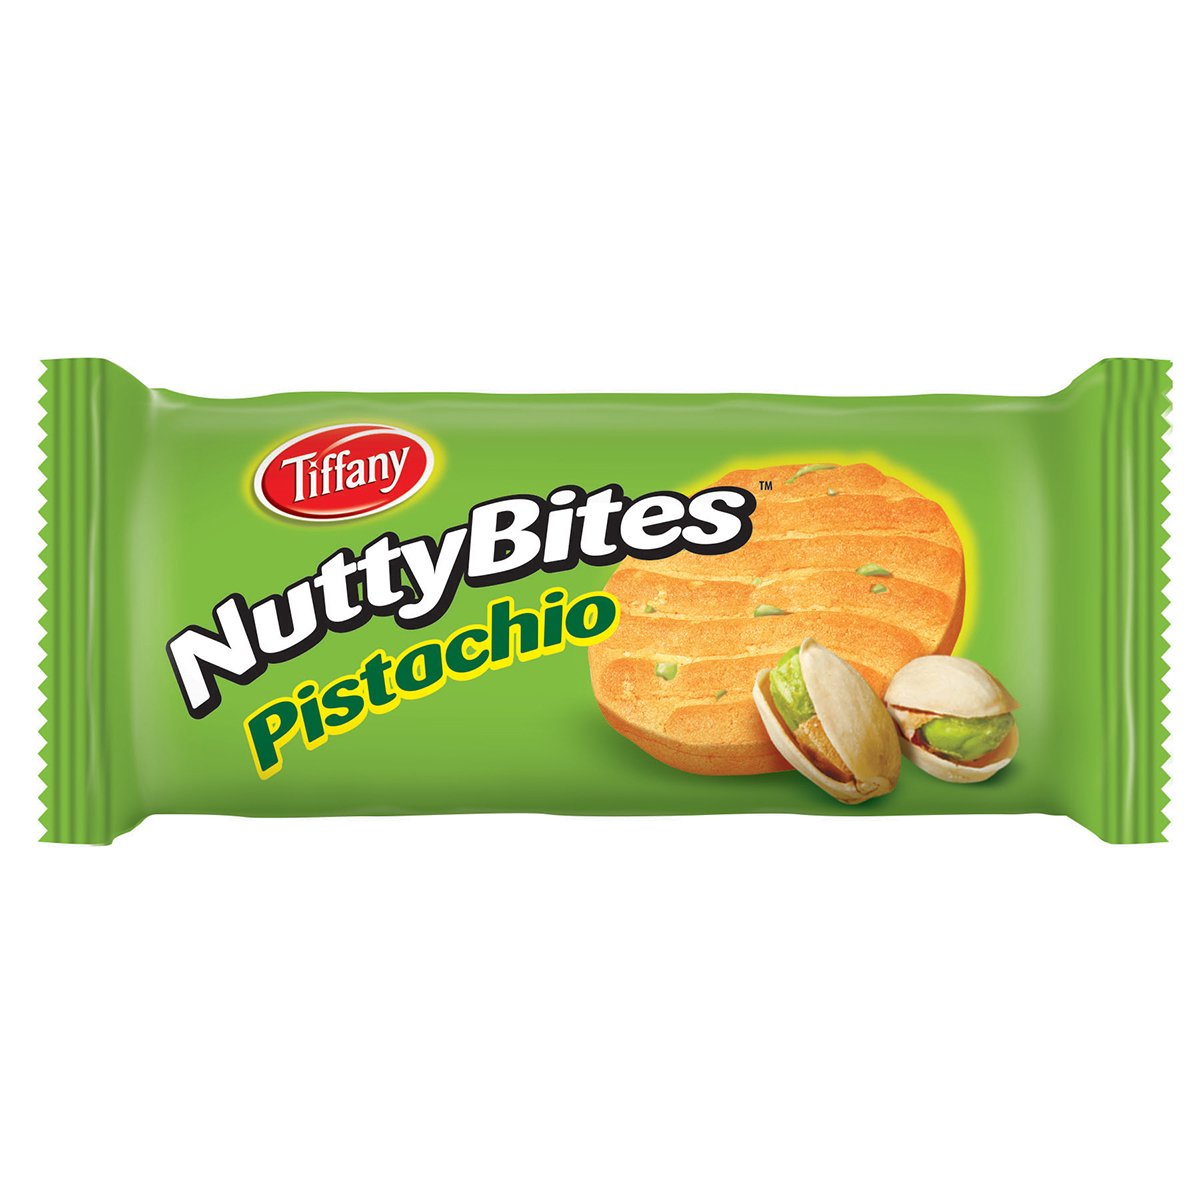 Tiffany Nutty Bites Pistachio 72 g